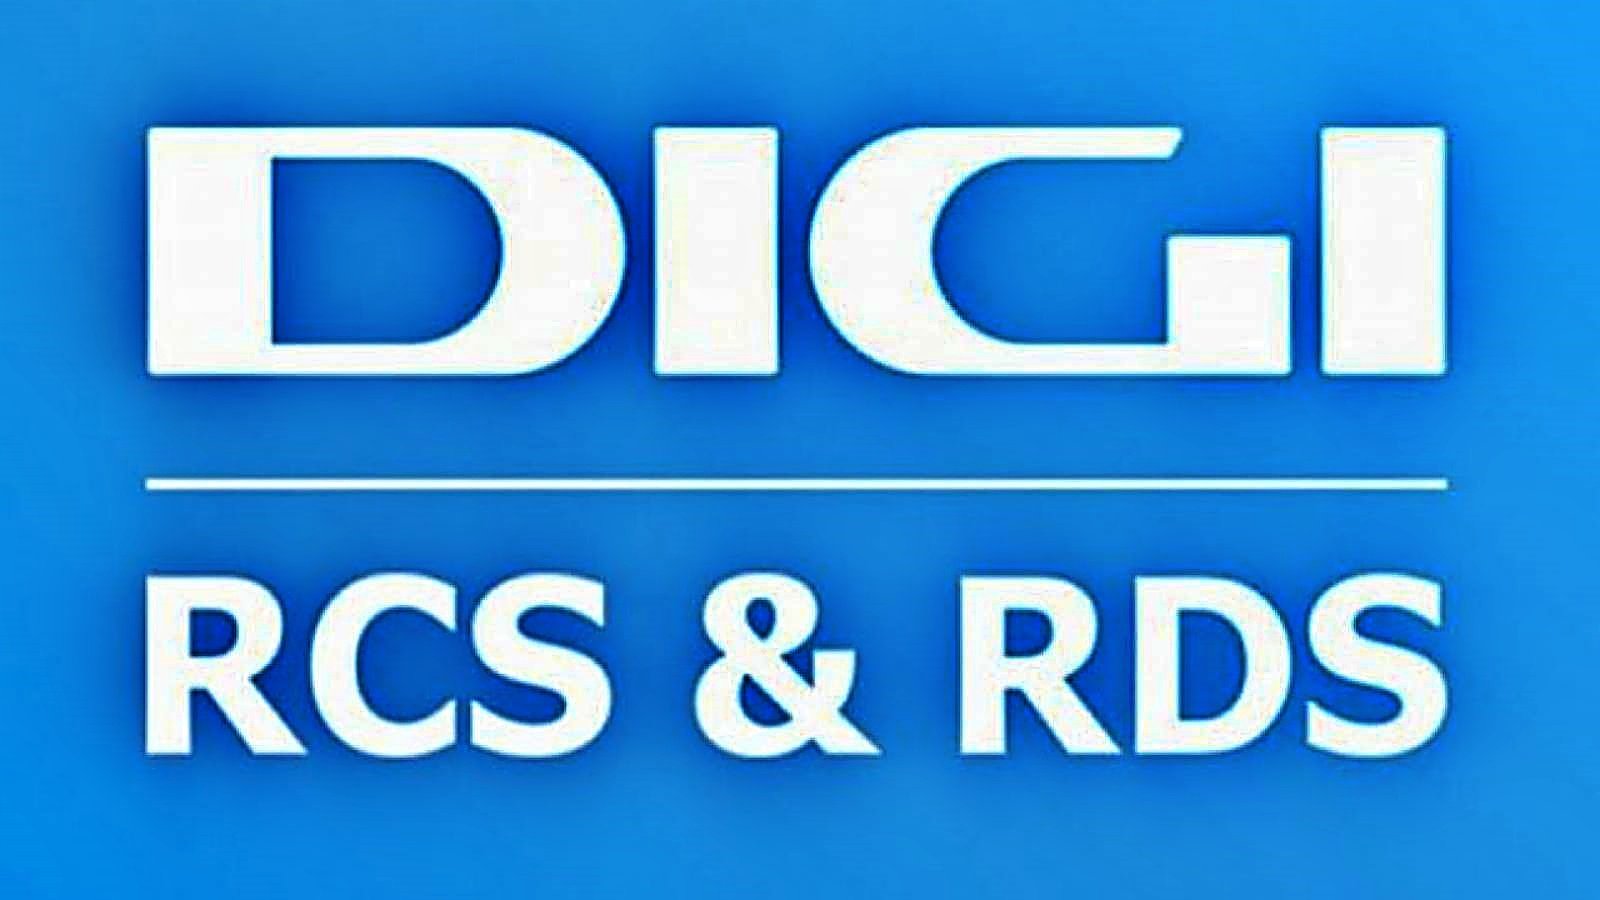 DIGI RCS & RDS internet 10 gbps 2022